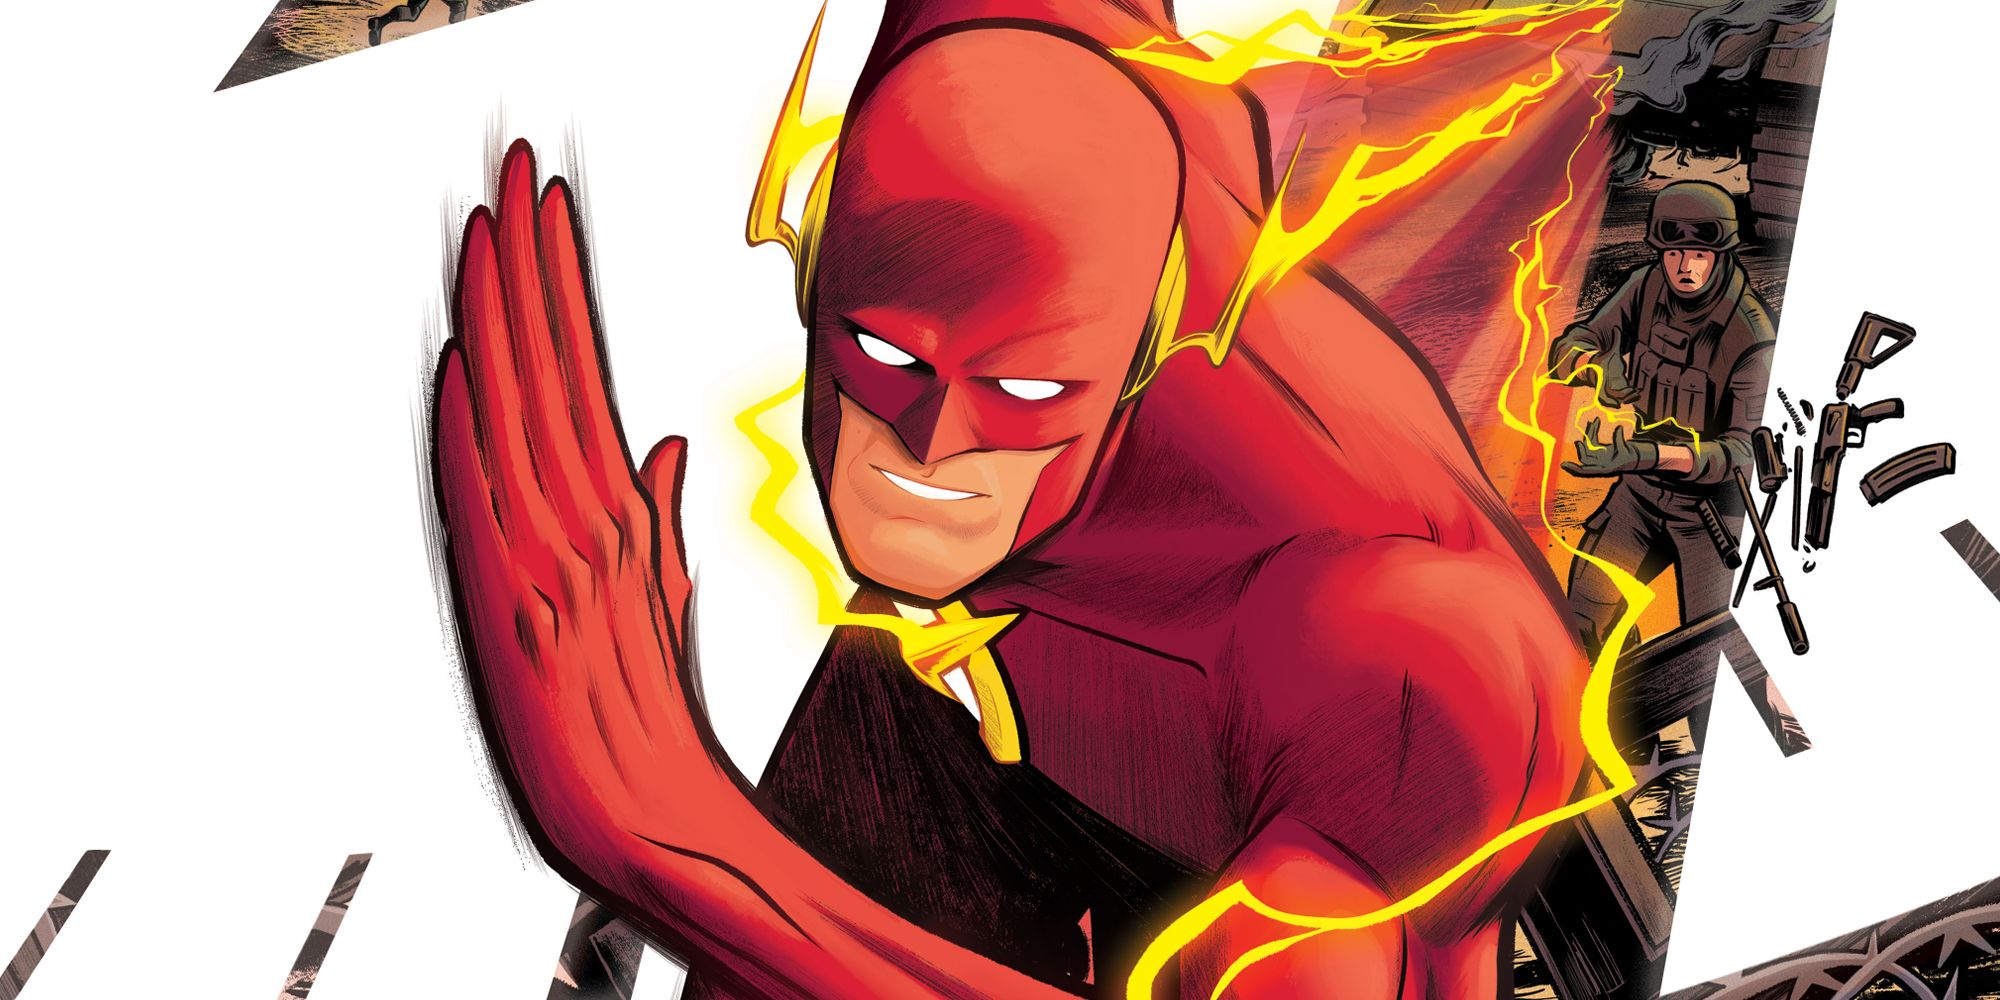 Wally West's Flash runs in DC Comics.